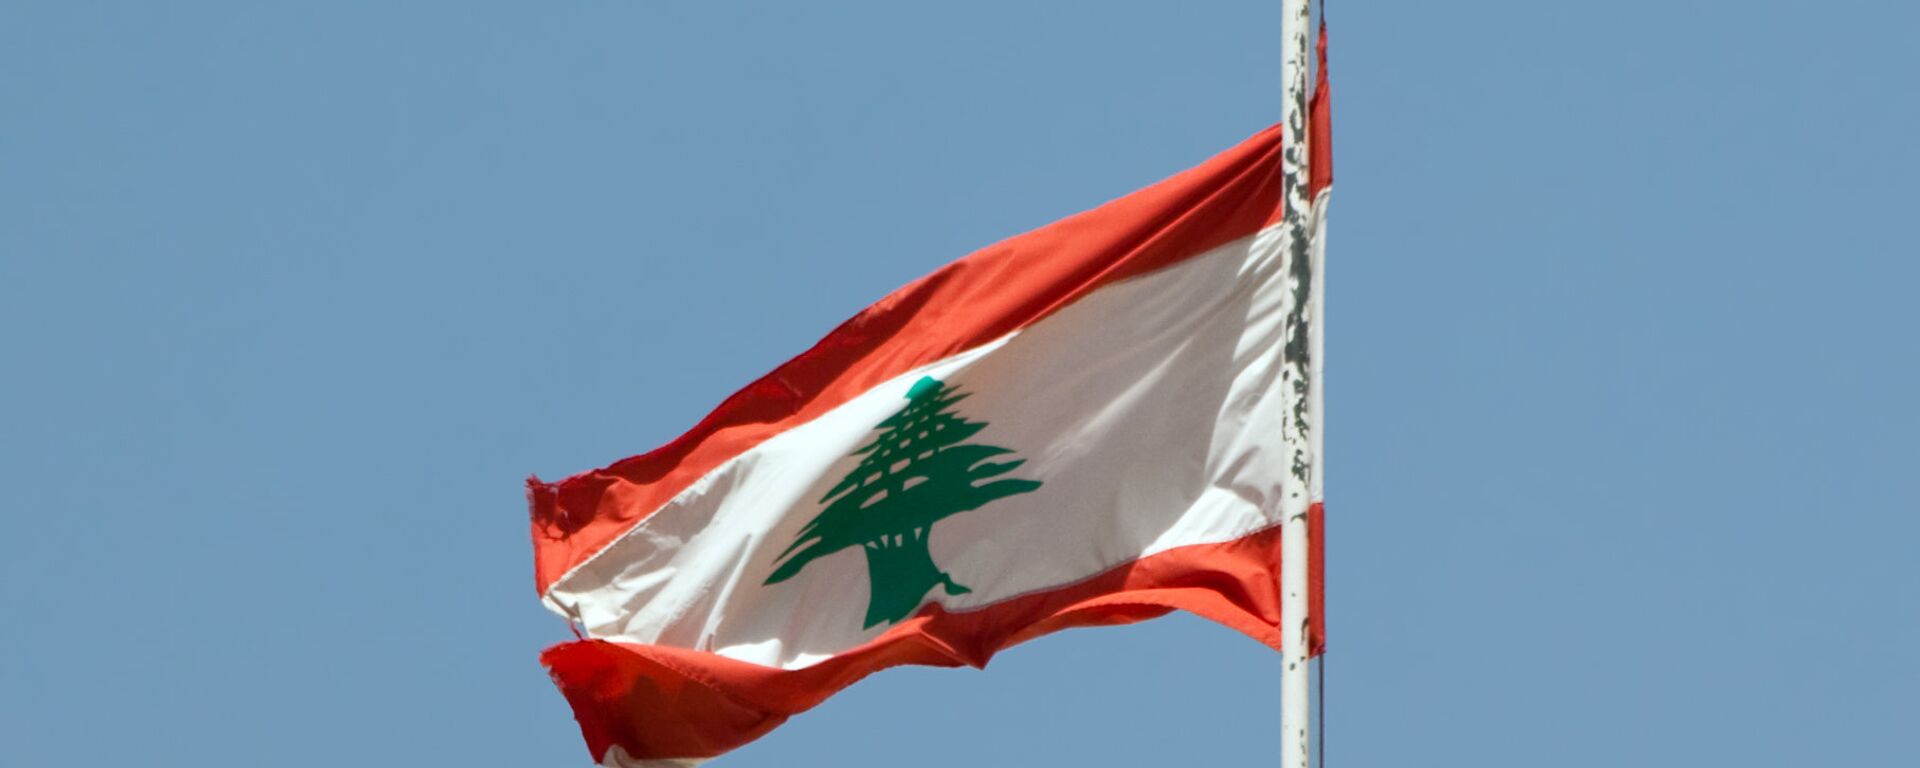 Bandera del Líbano - Sputnik Mundo, 1920, 03.11.2021